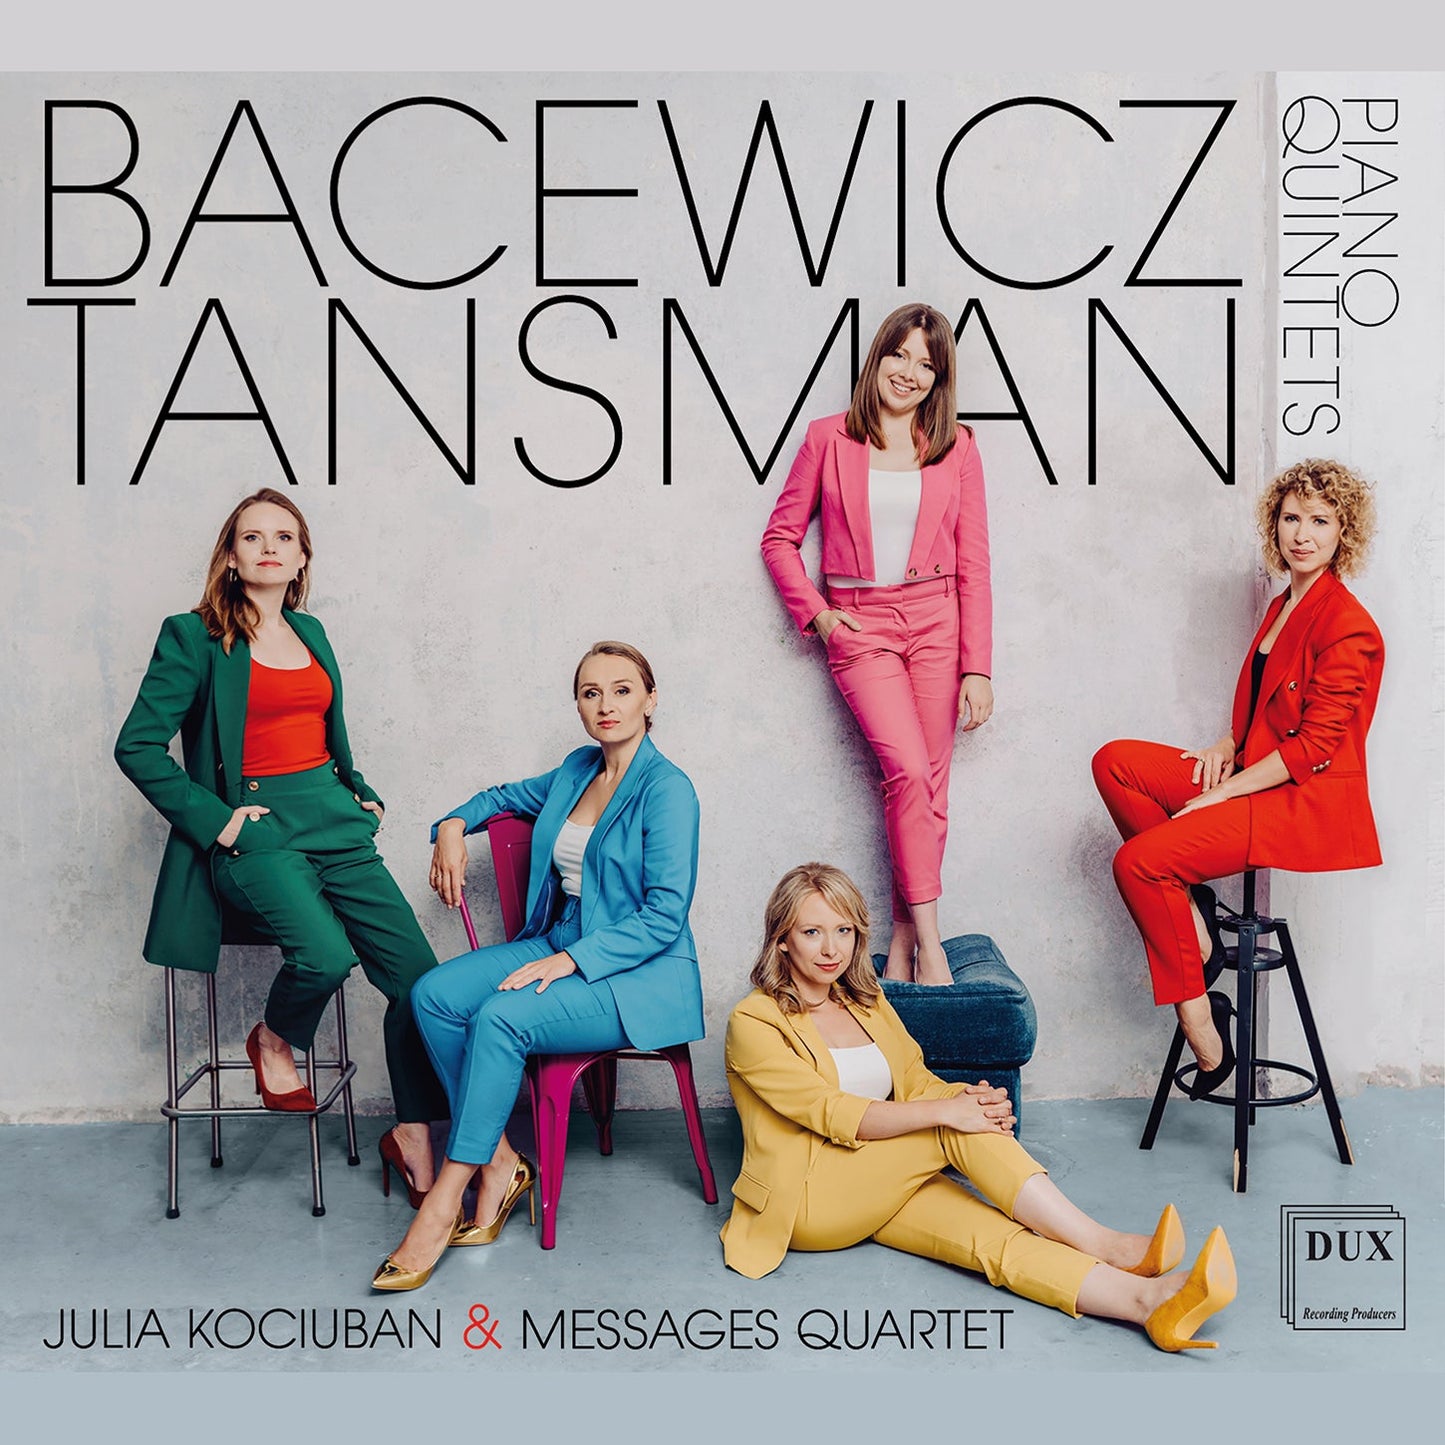 Bacewicz & Tansman: Piano Quintets